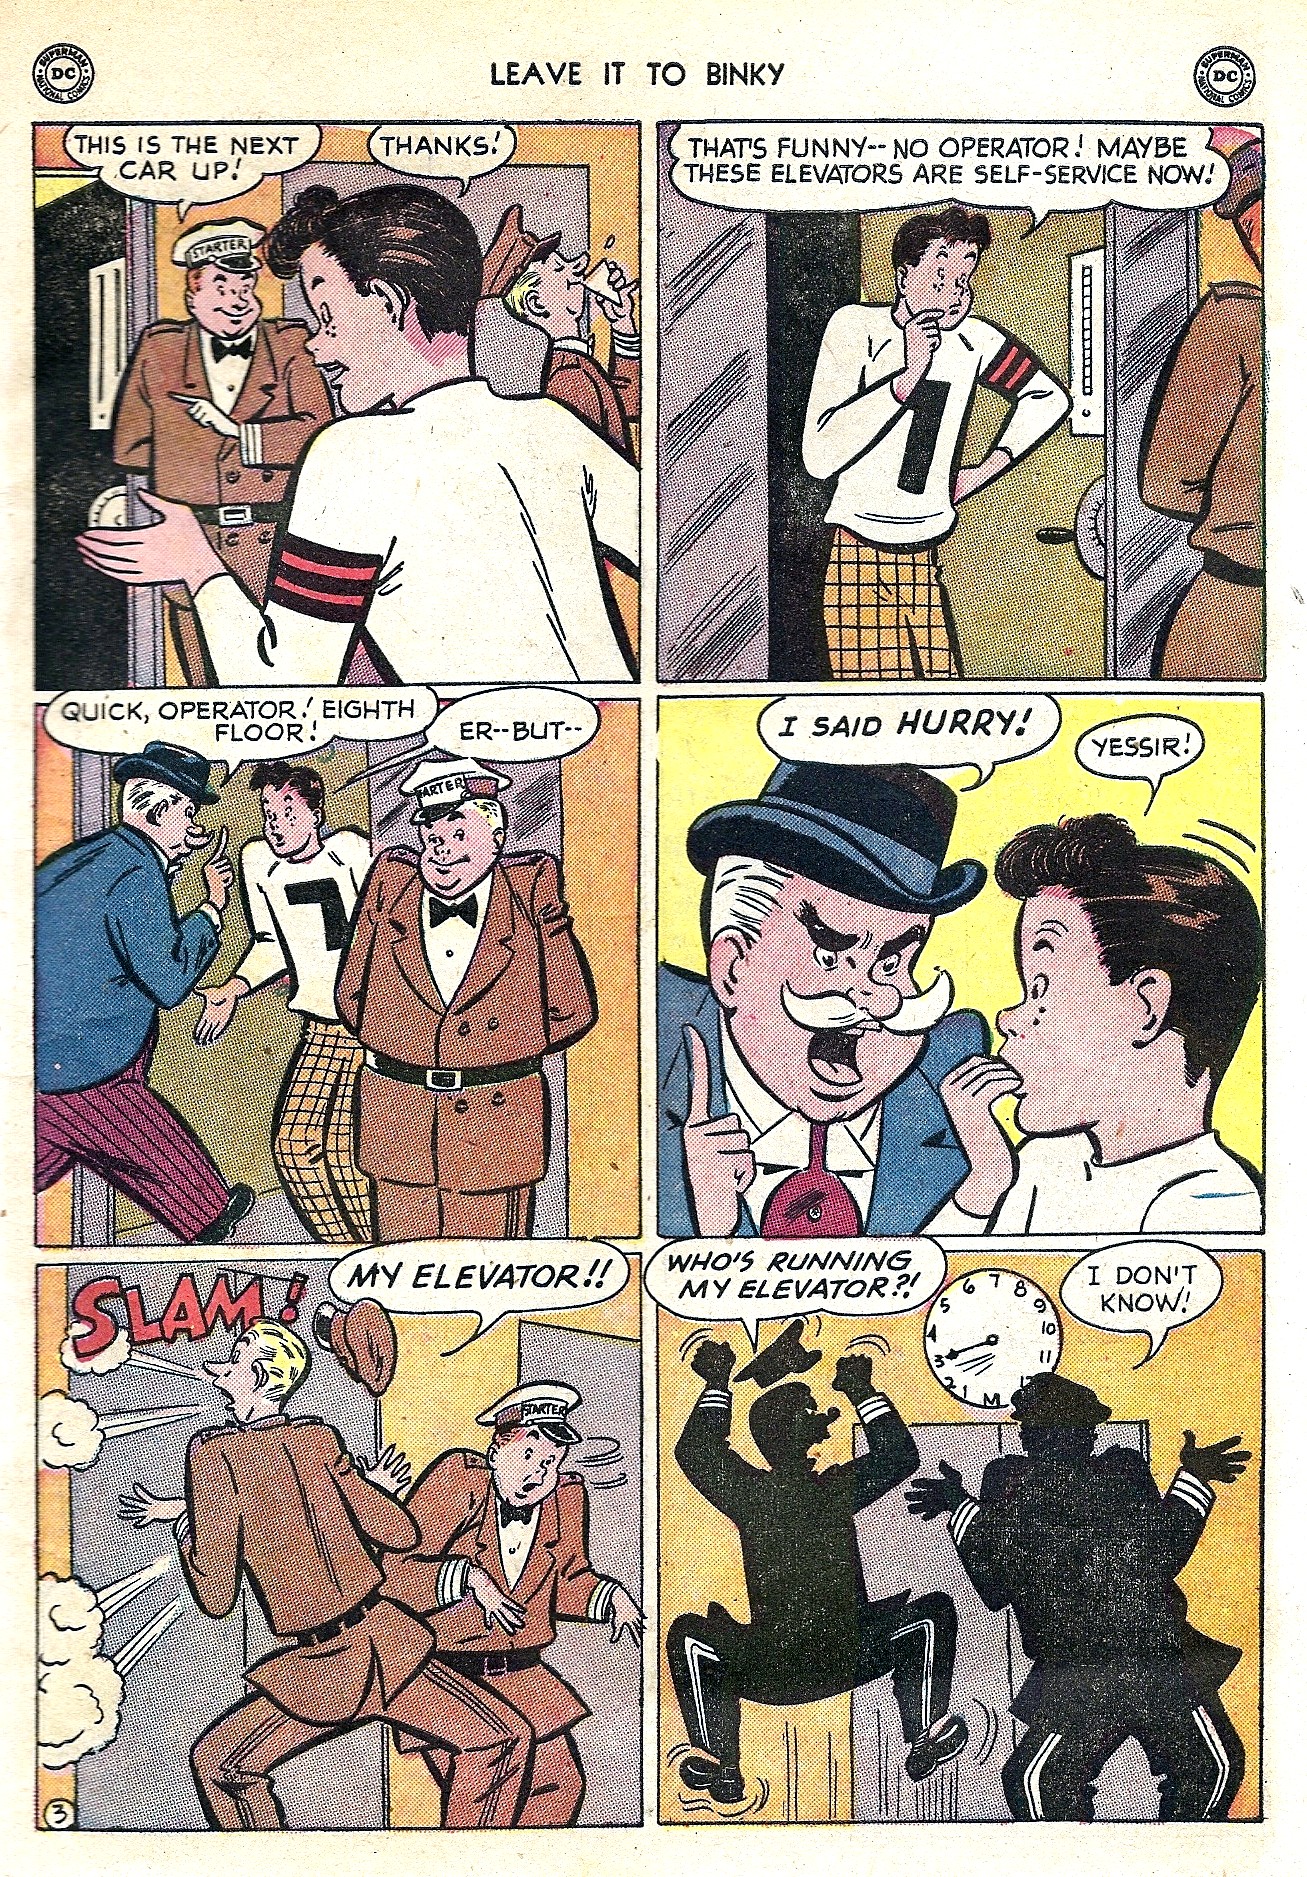 Read online Leave it to Binky comic -  Issue #16 - 5